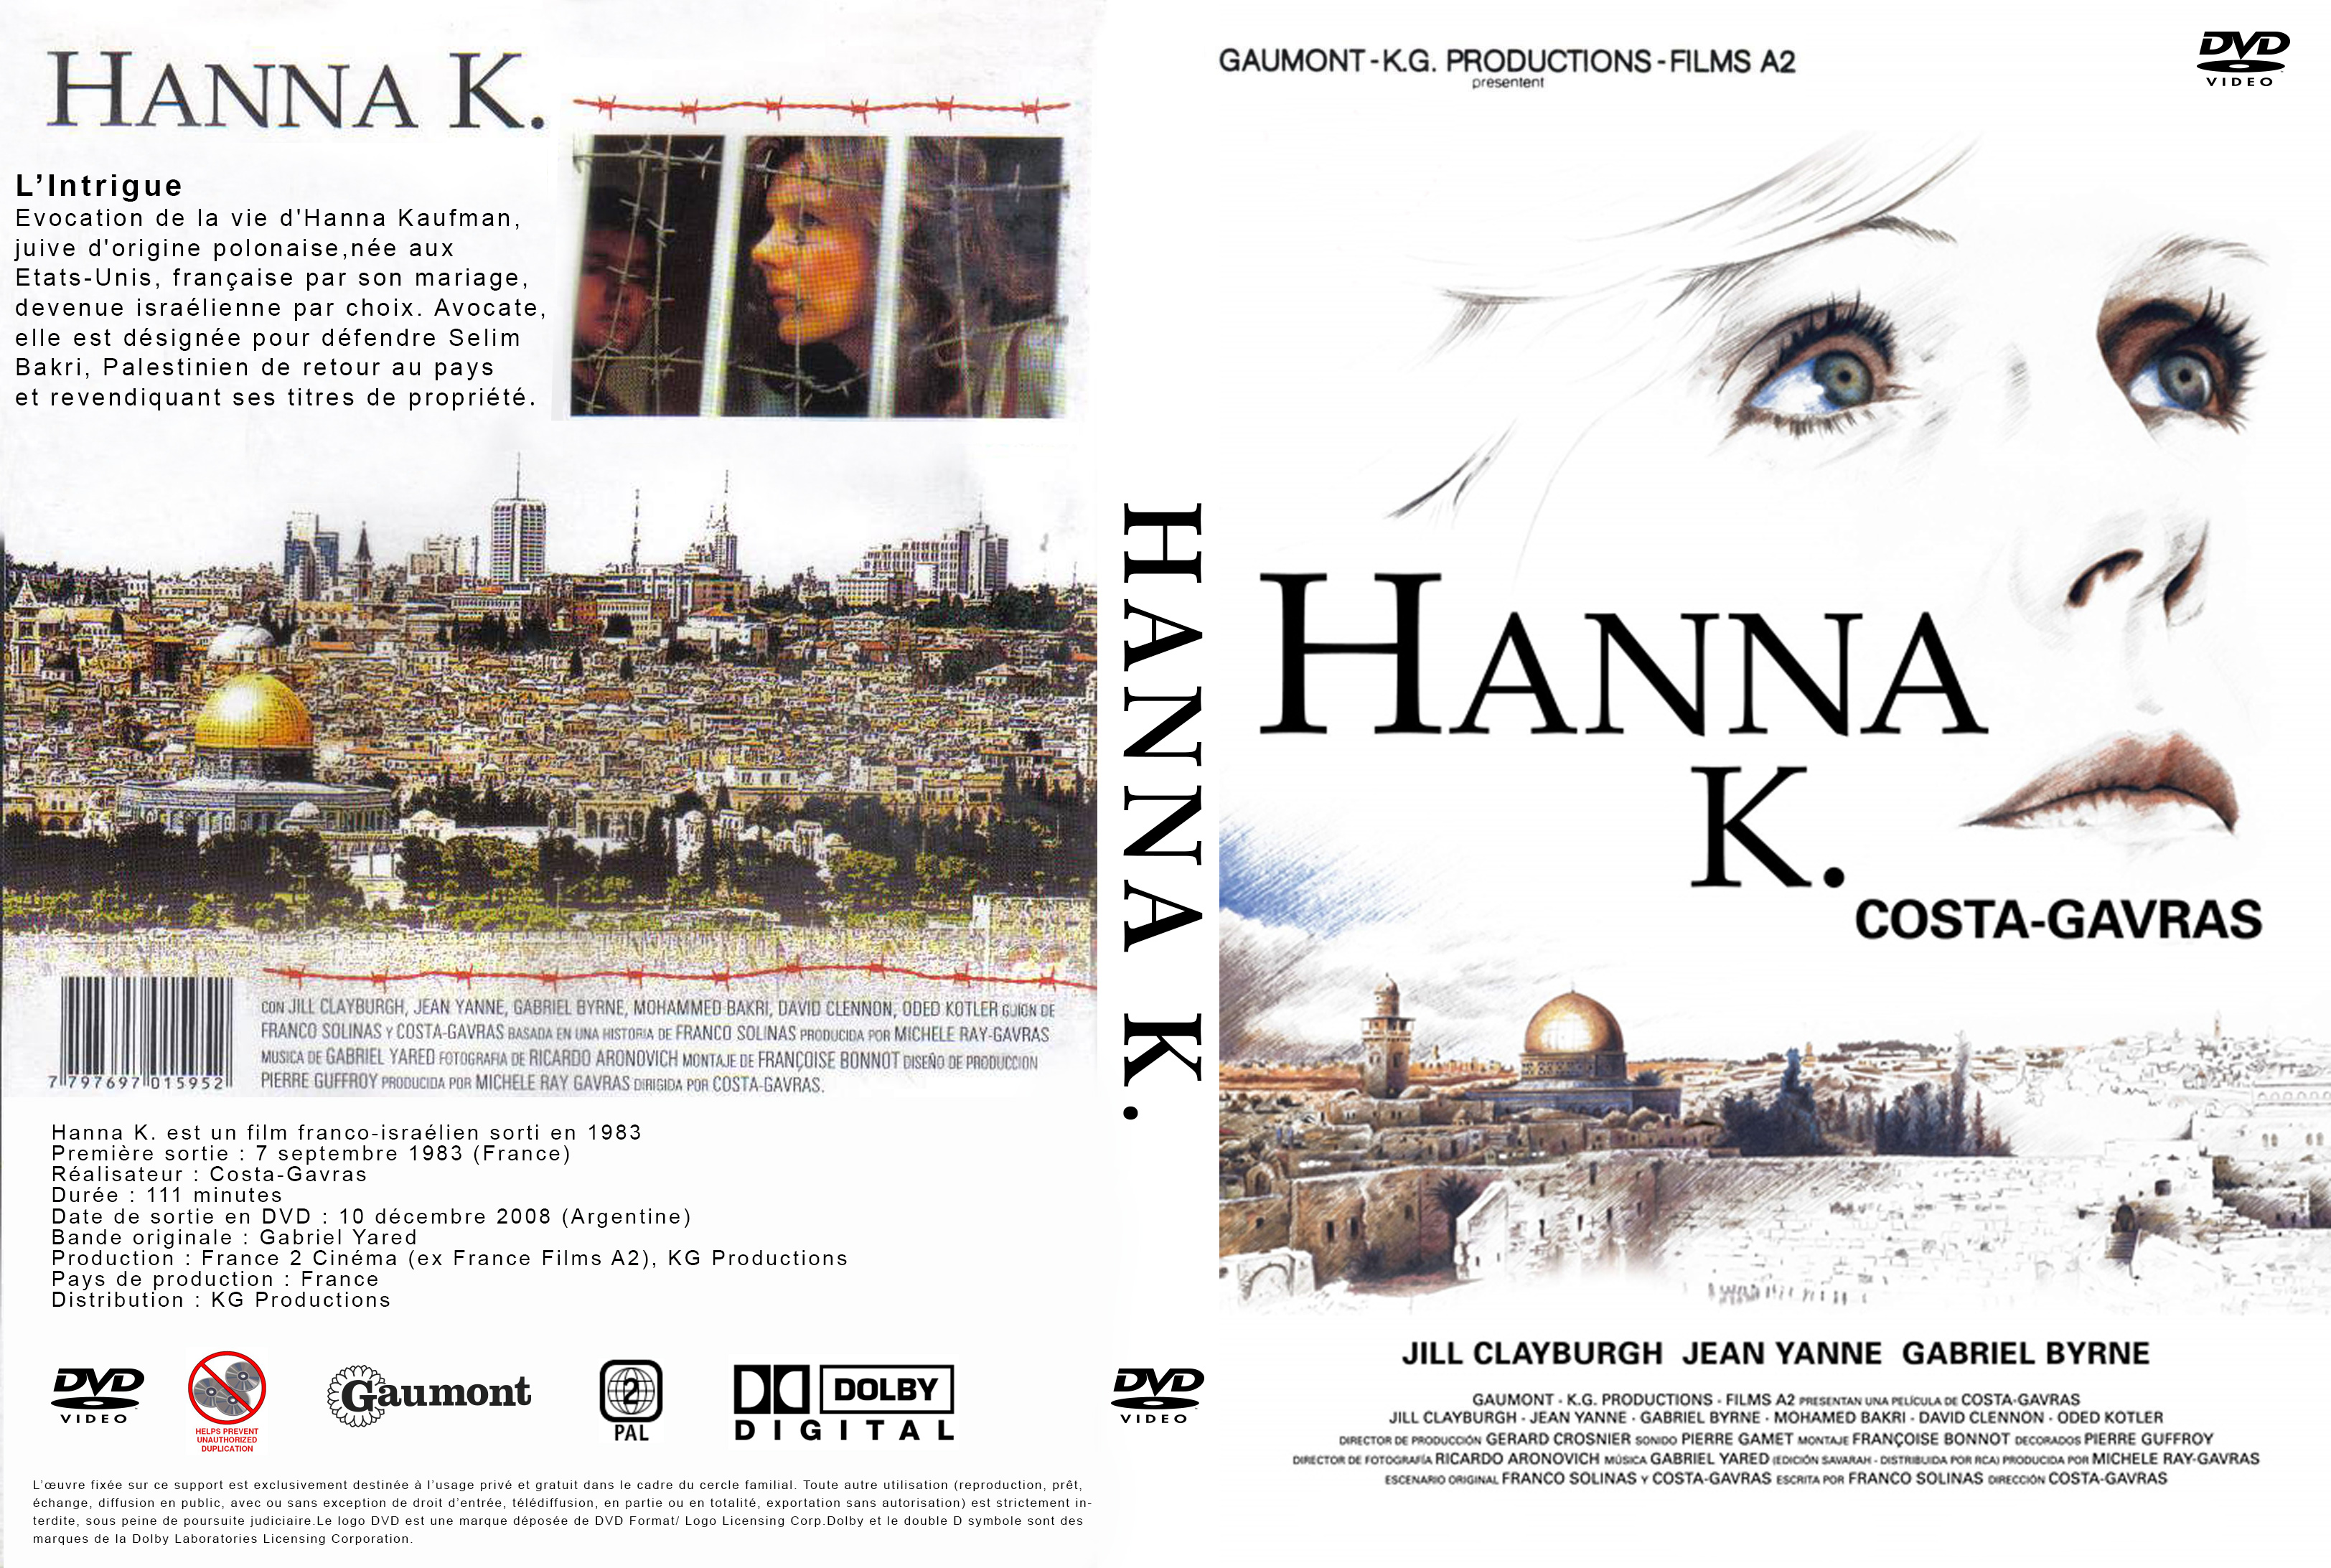 Jaquette DVD Hanna K custom